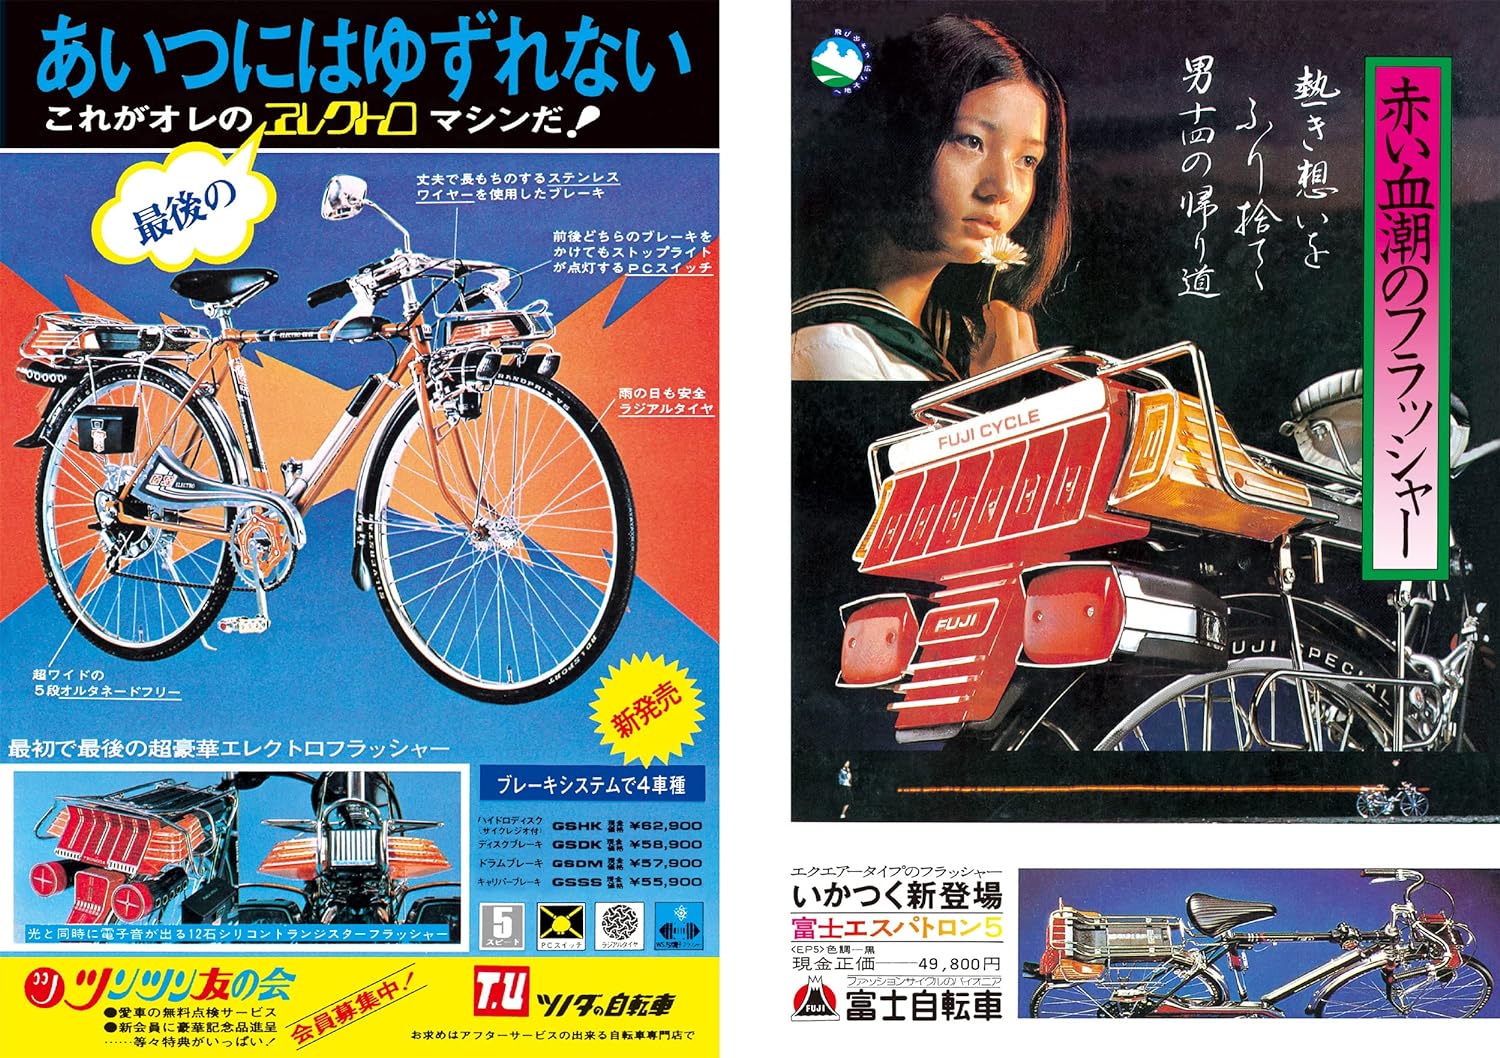 Children's advertisement in the Showa era 2